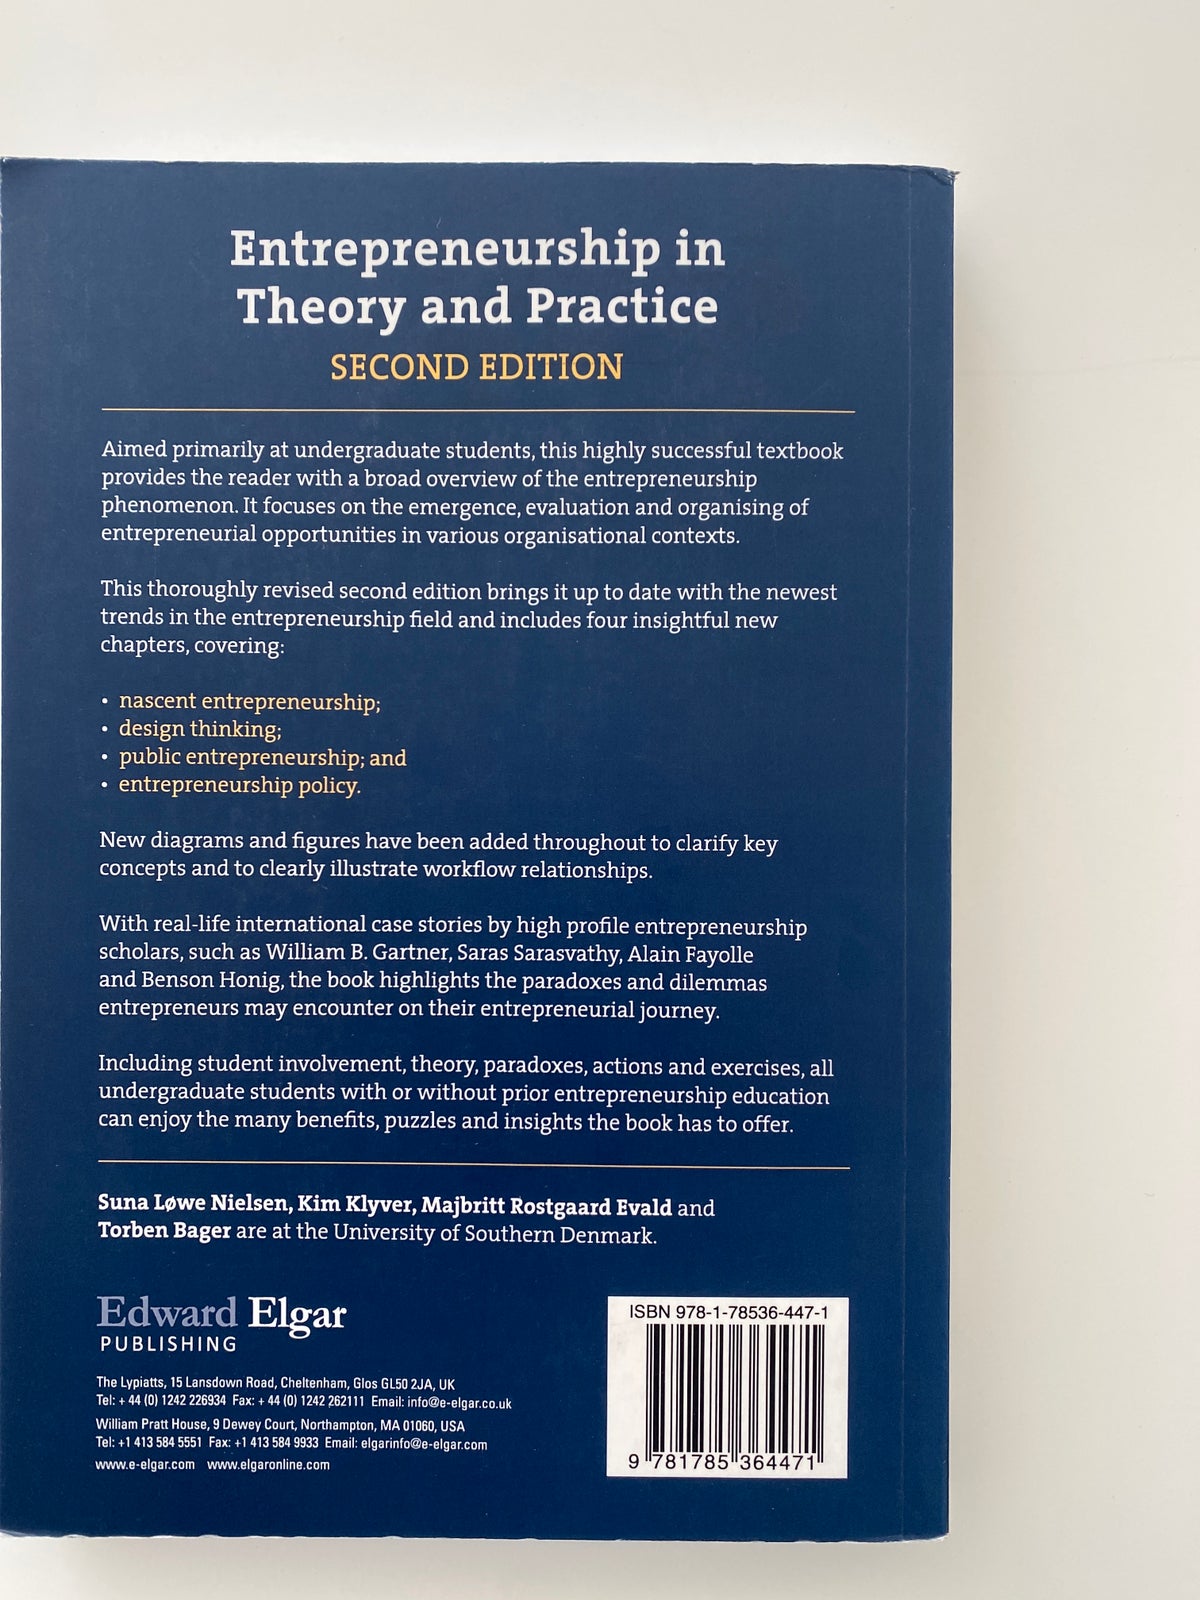 Entrepreneurship in Theory and Practice, Nielsen, Klyver